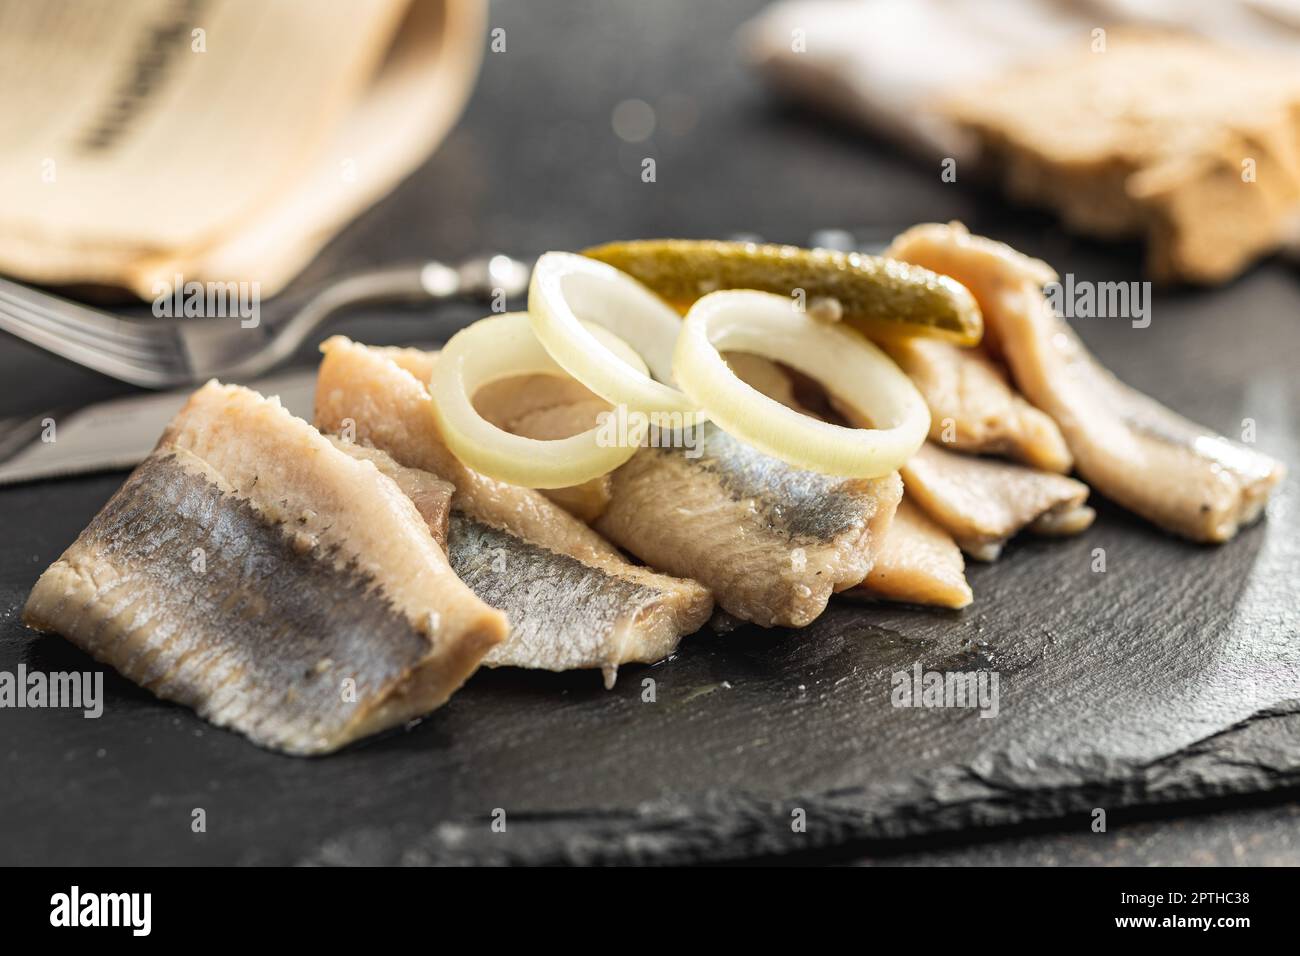 Marinated herring fish on the kitchen table. Stock Photo